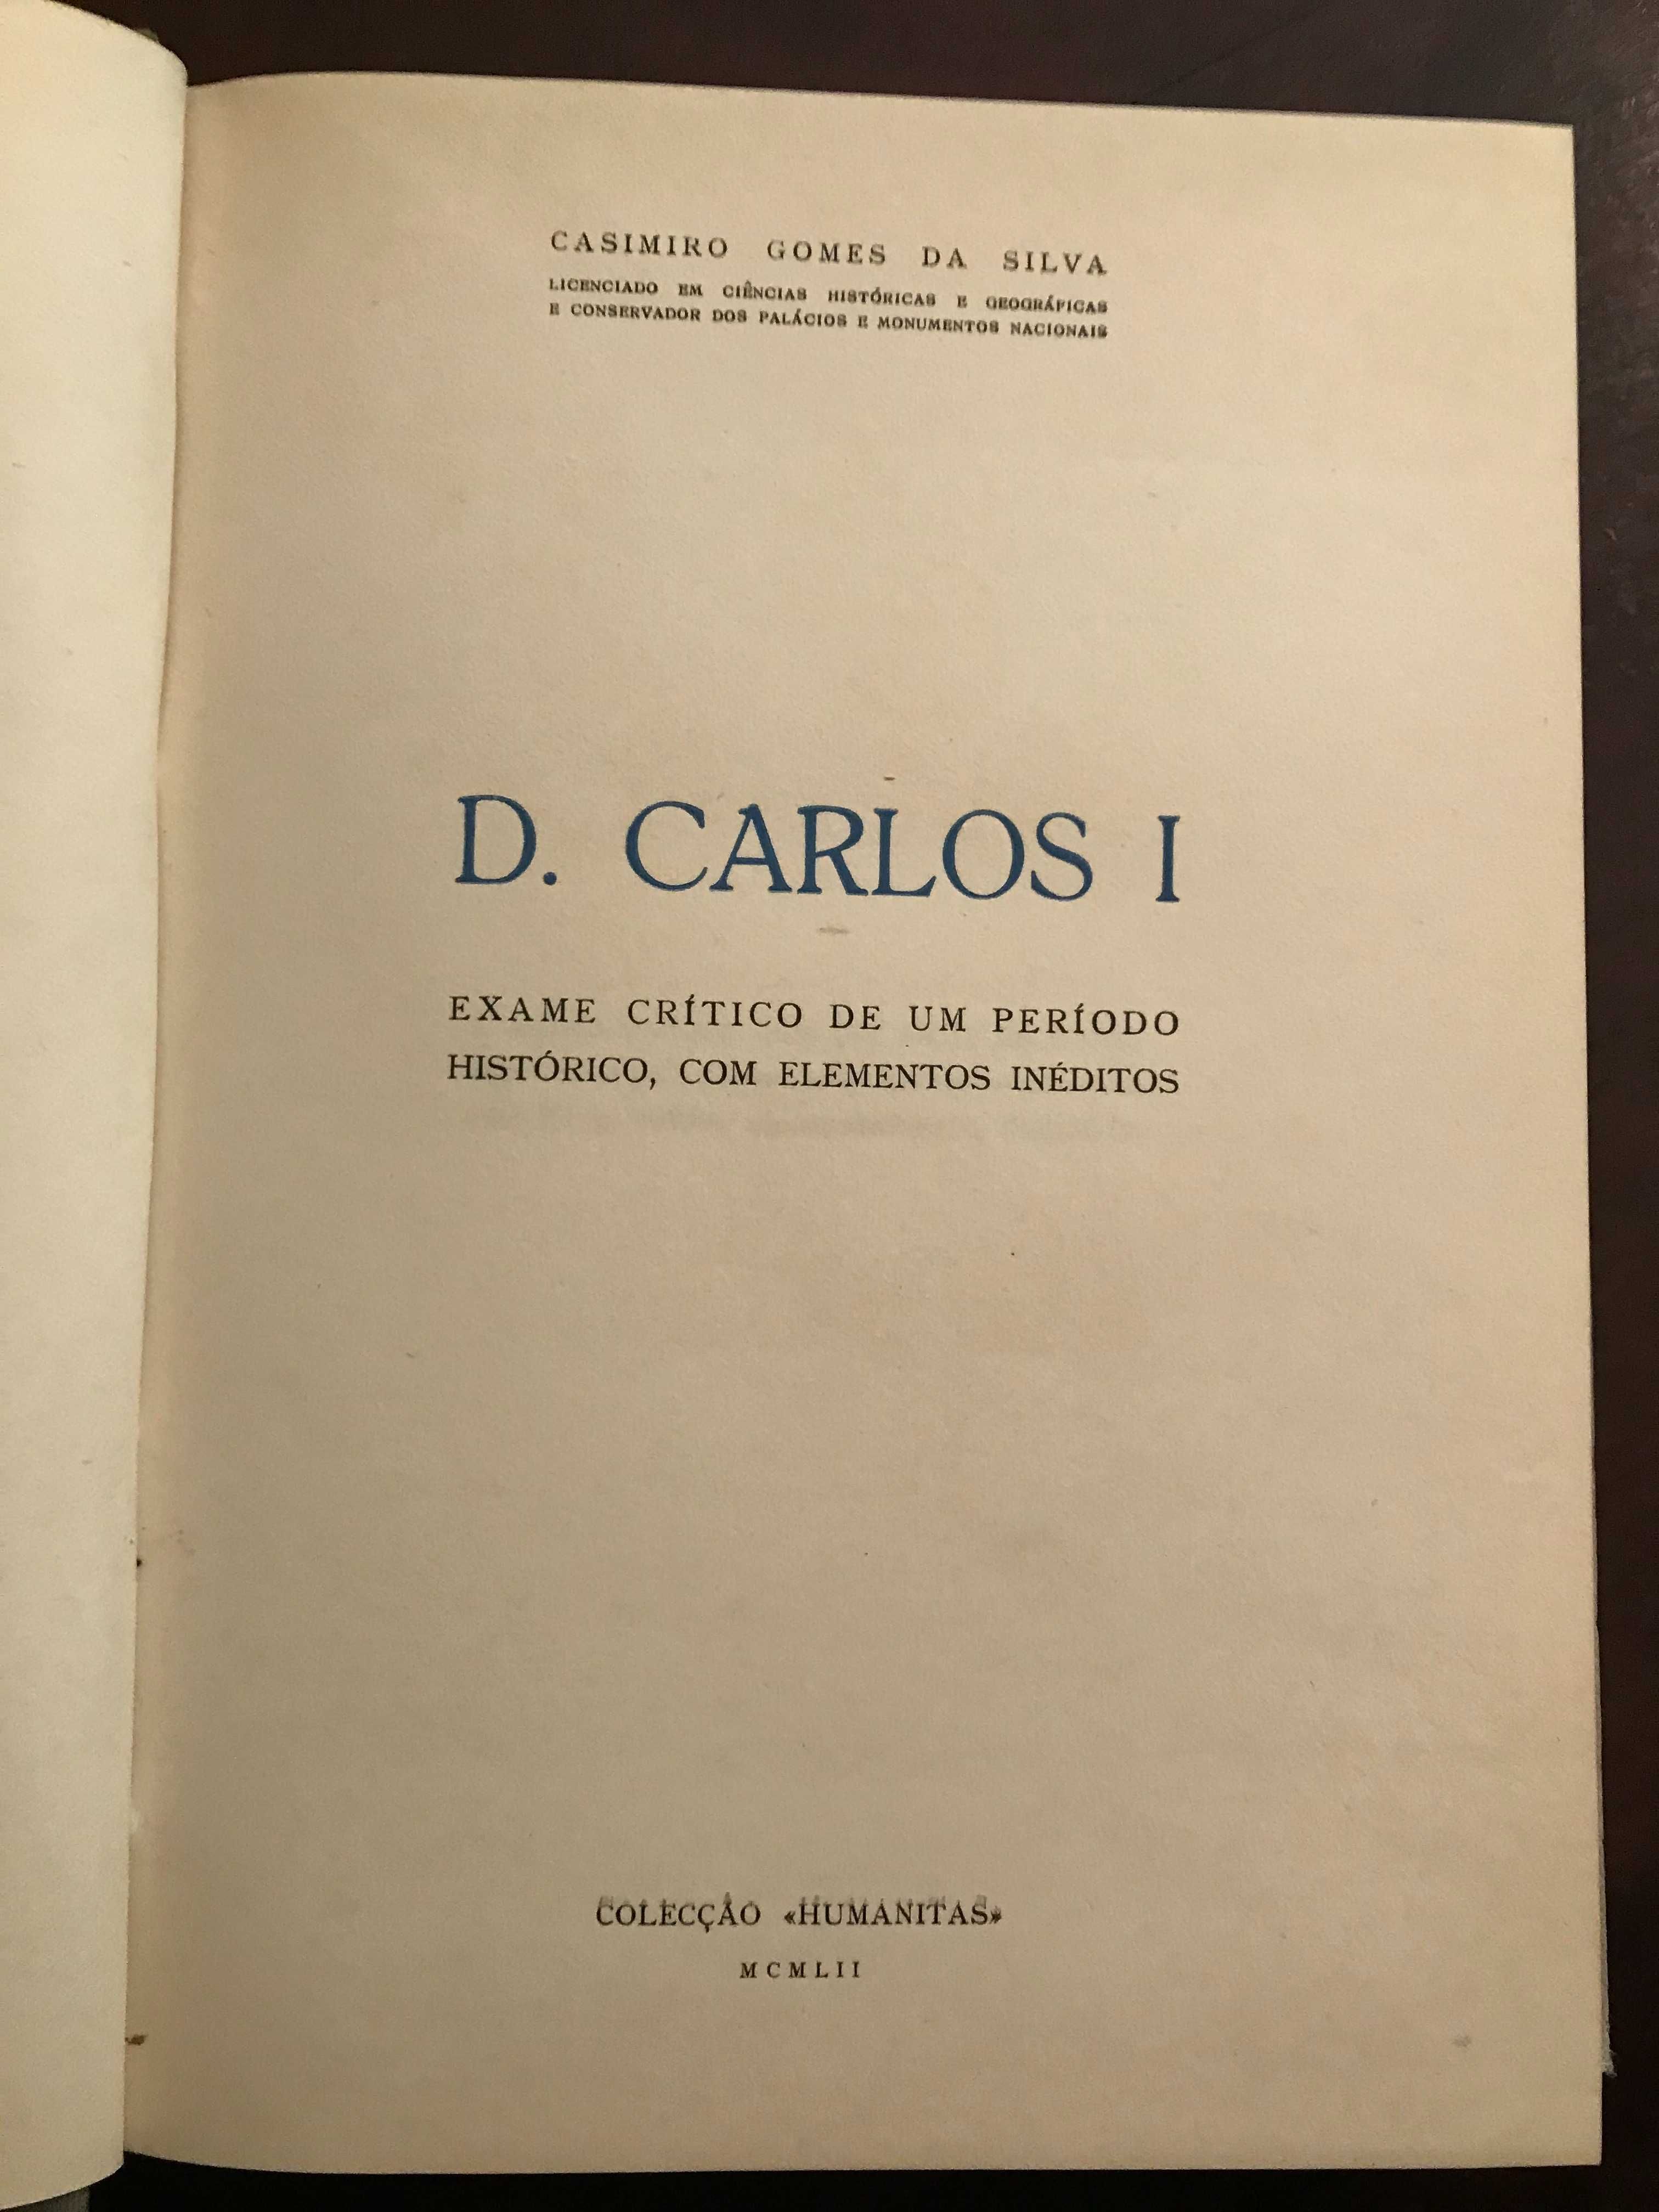 Livro D. Carlos I - Casimiro Gomes da Silva, 1952